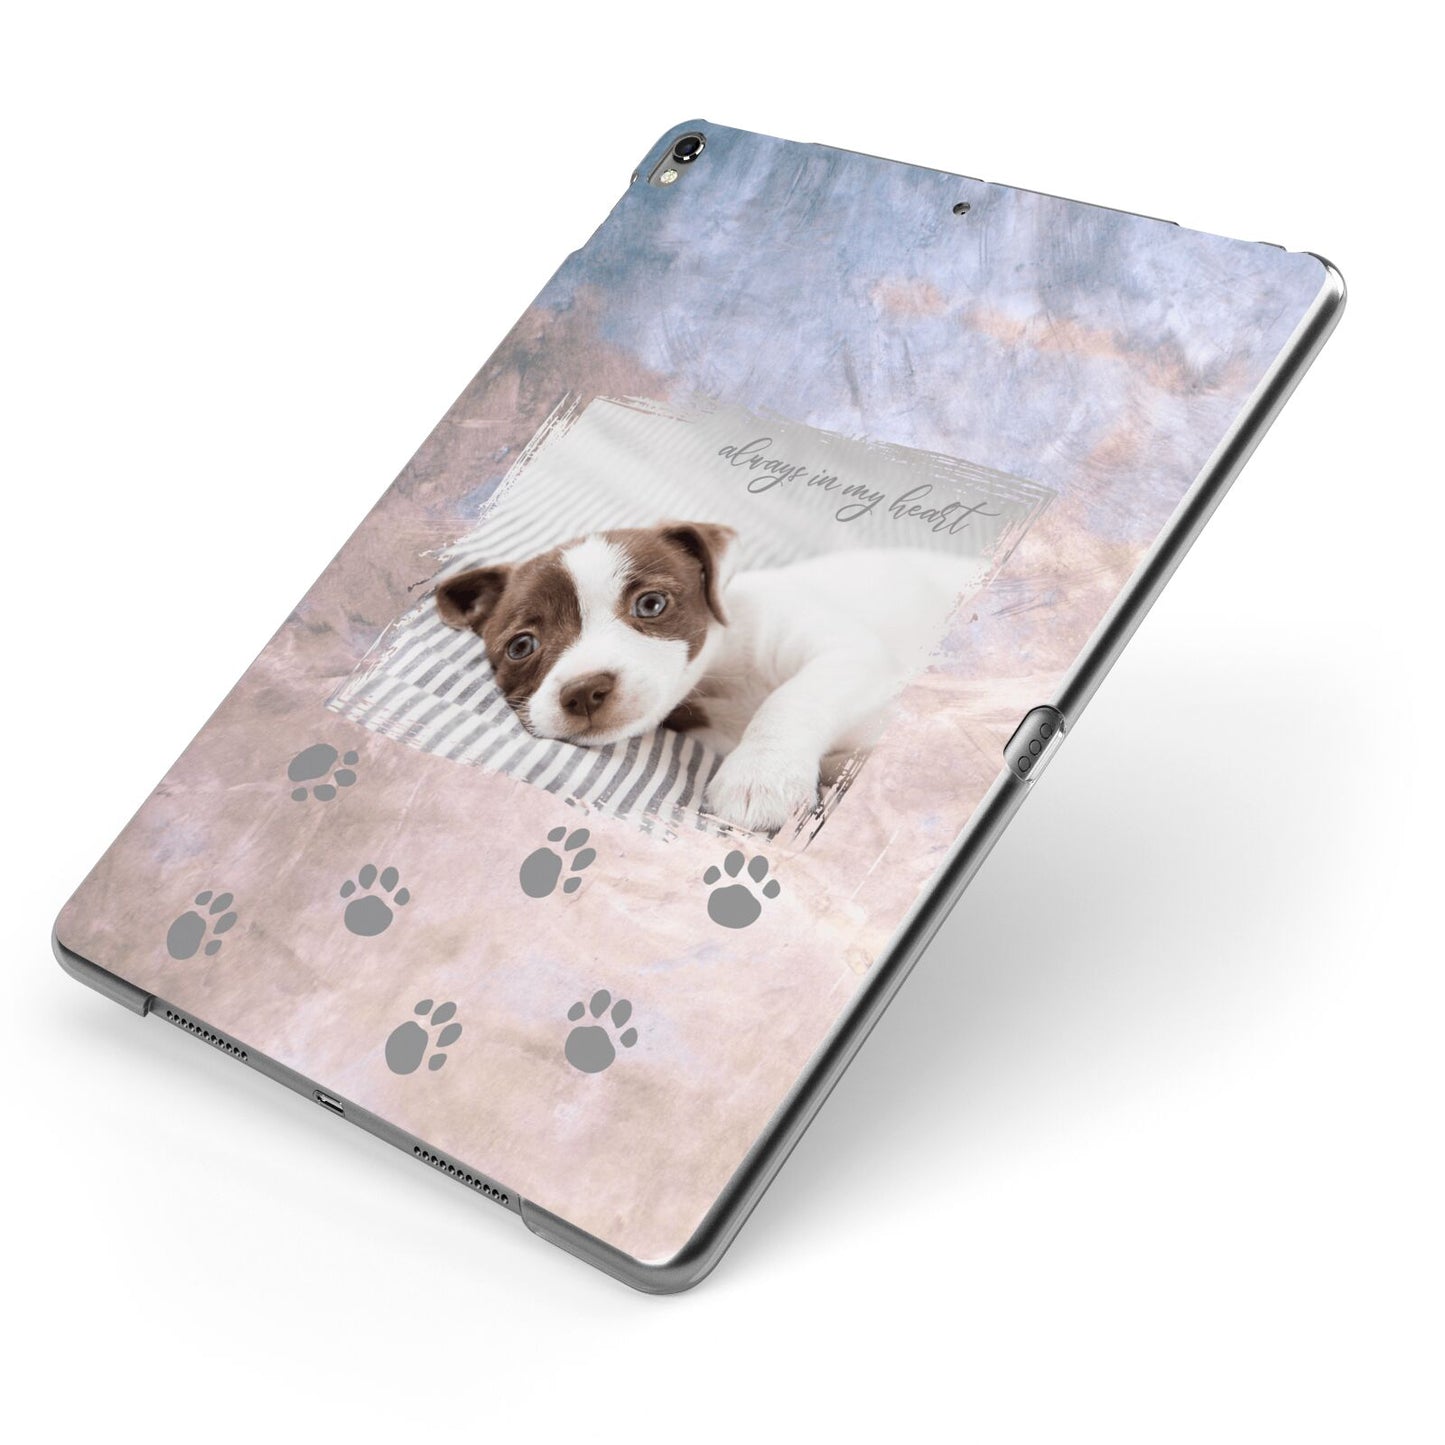 Pet Photo Personalised Apple iPad Case on Grey iPad Side View